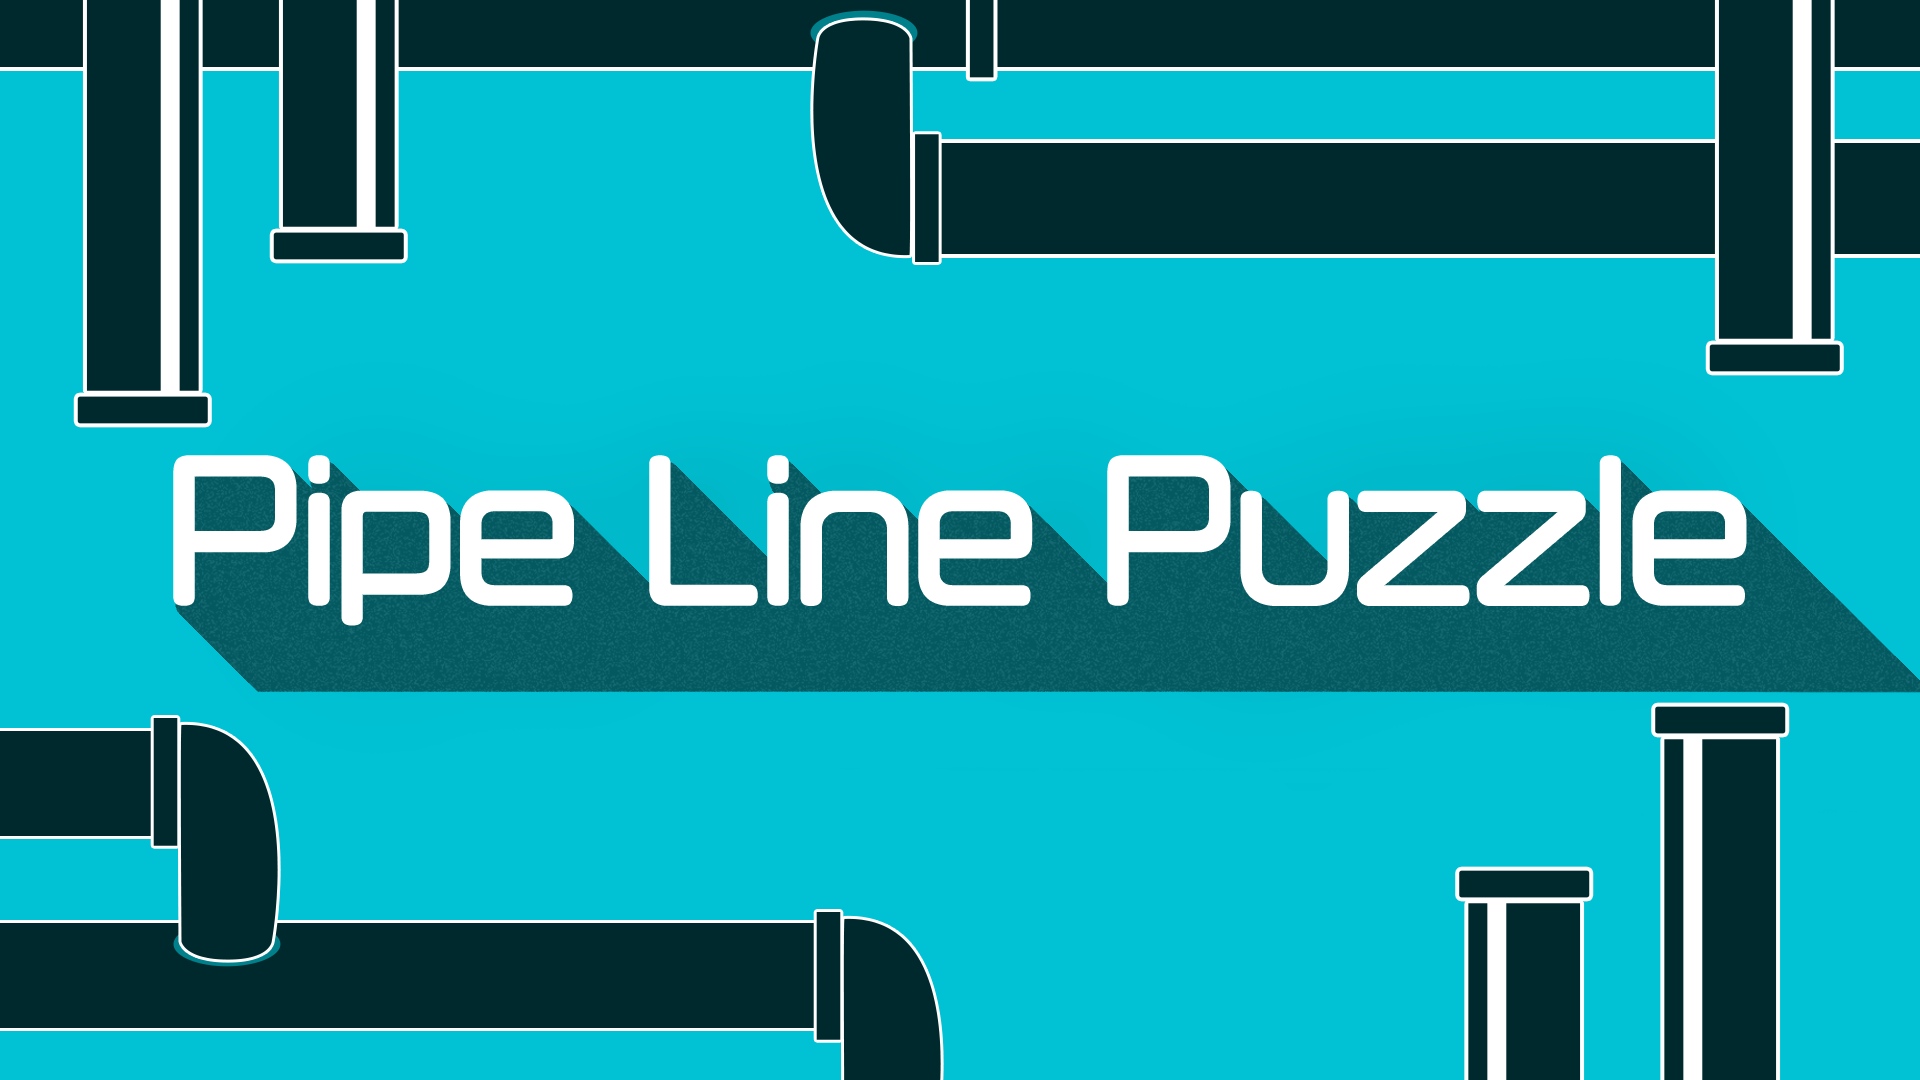 Pipe Line Puzzle